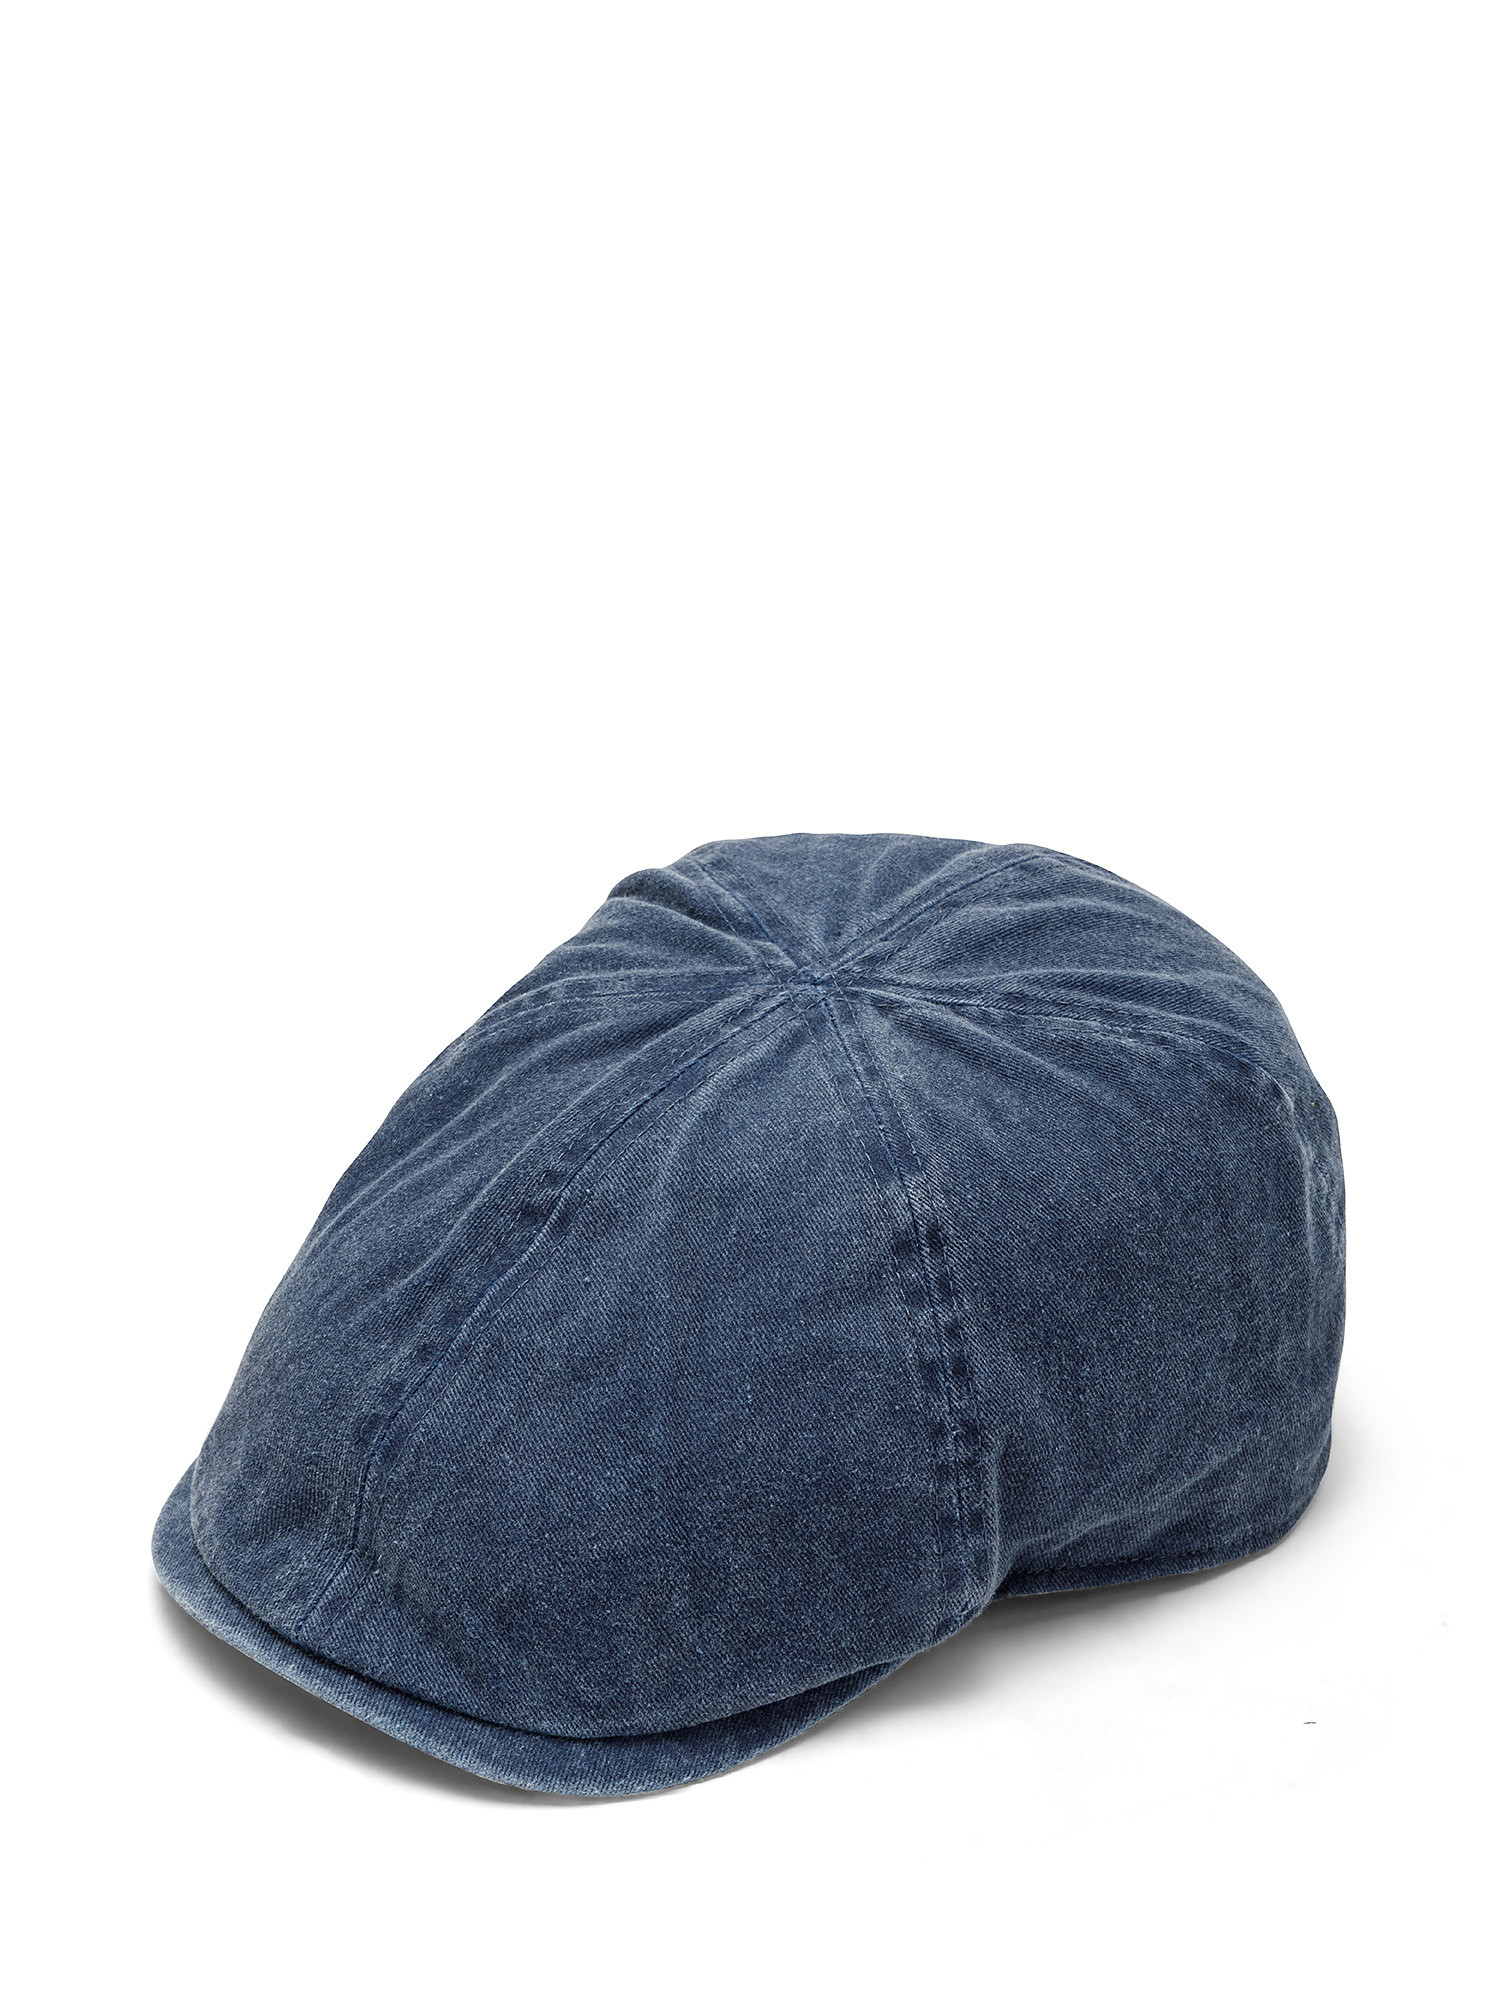 Luca D'Altieri - Cotton cap, Dark Blue, large image number 0